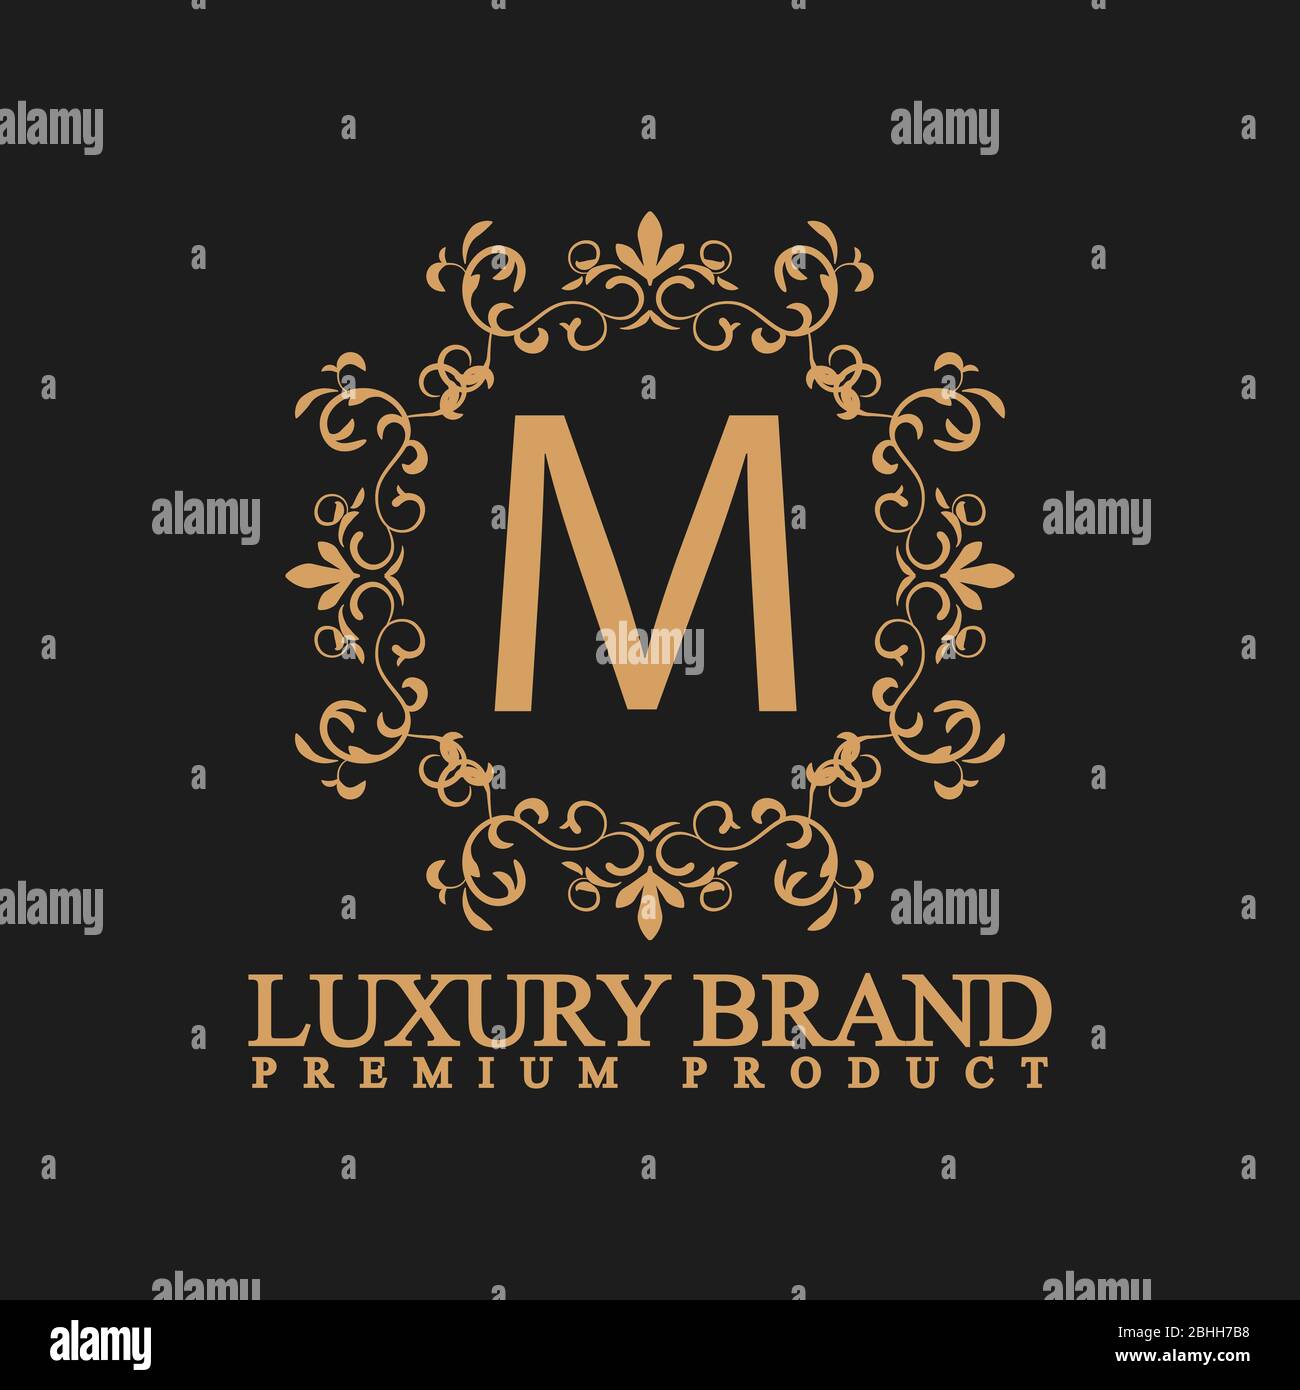 Premium Vector  Luxury logo. crests logo. logo design for hotel ,resort,  restaurant, real estate ,spa, fashion brand identity